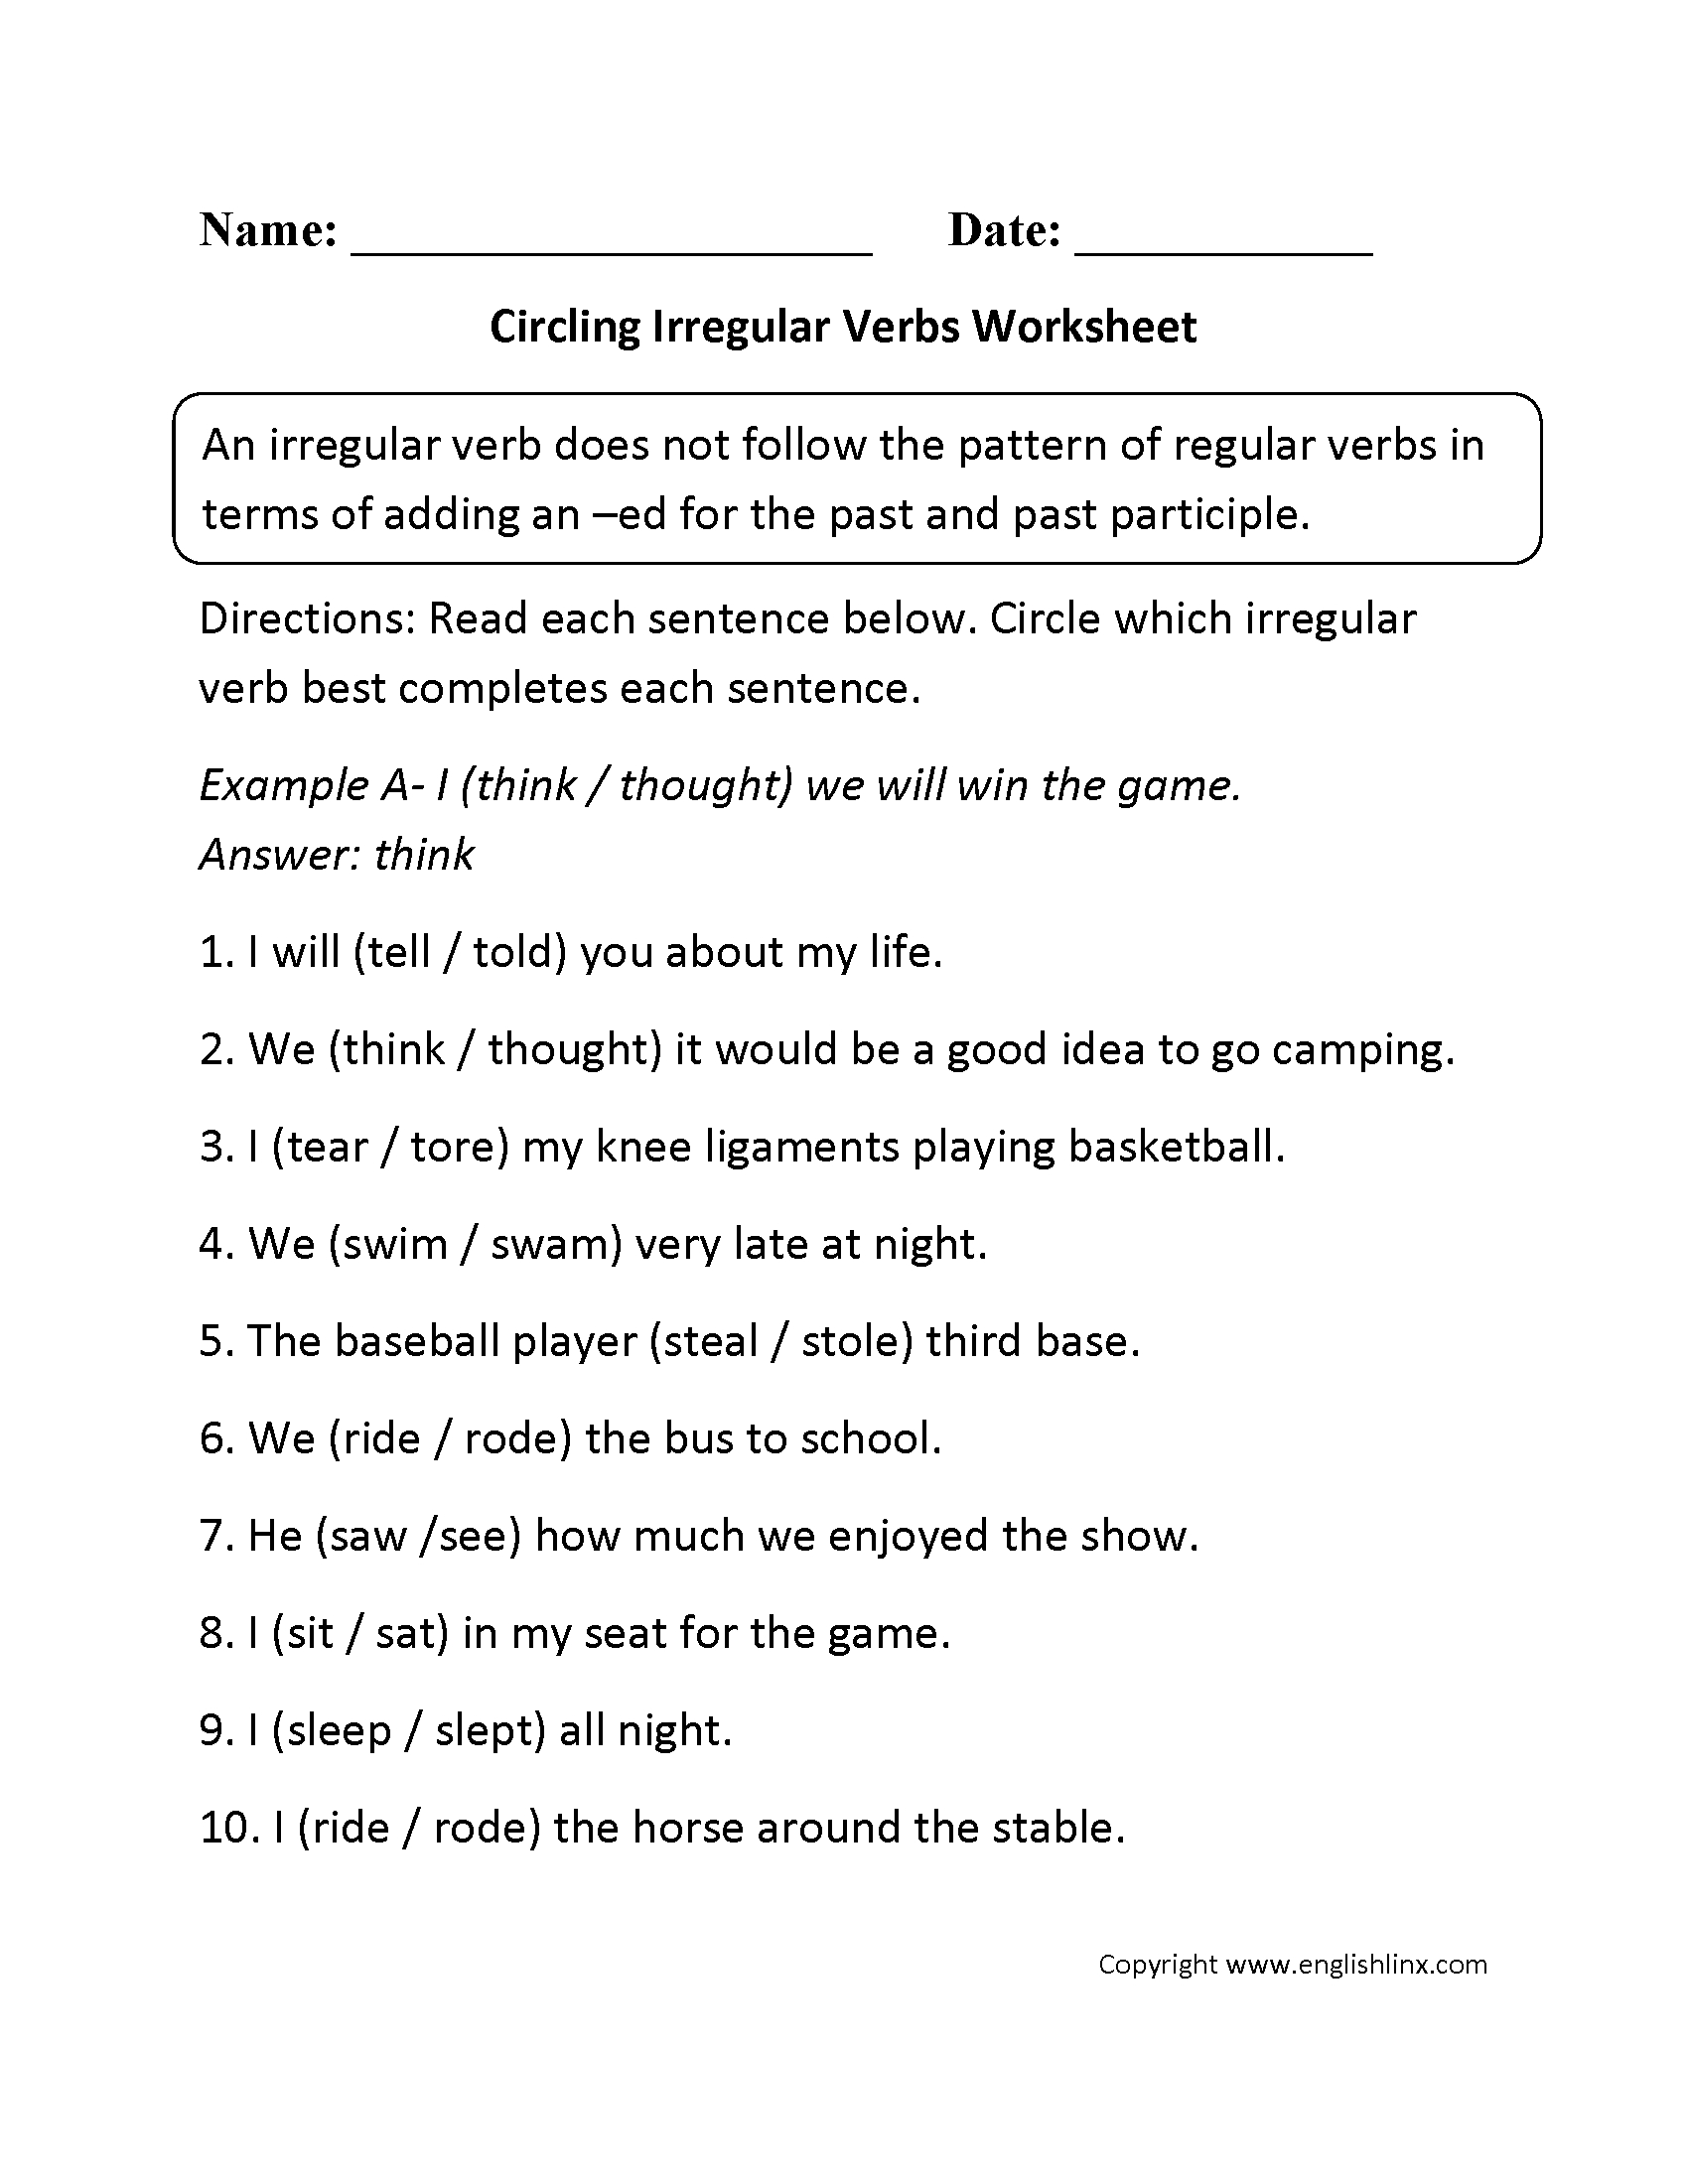 Verbs Worksheets | Irregular Verbs Worksheets | Free Printable Irregular Verb Worksheets